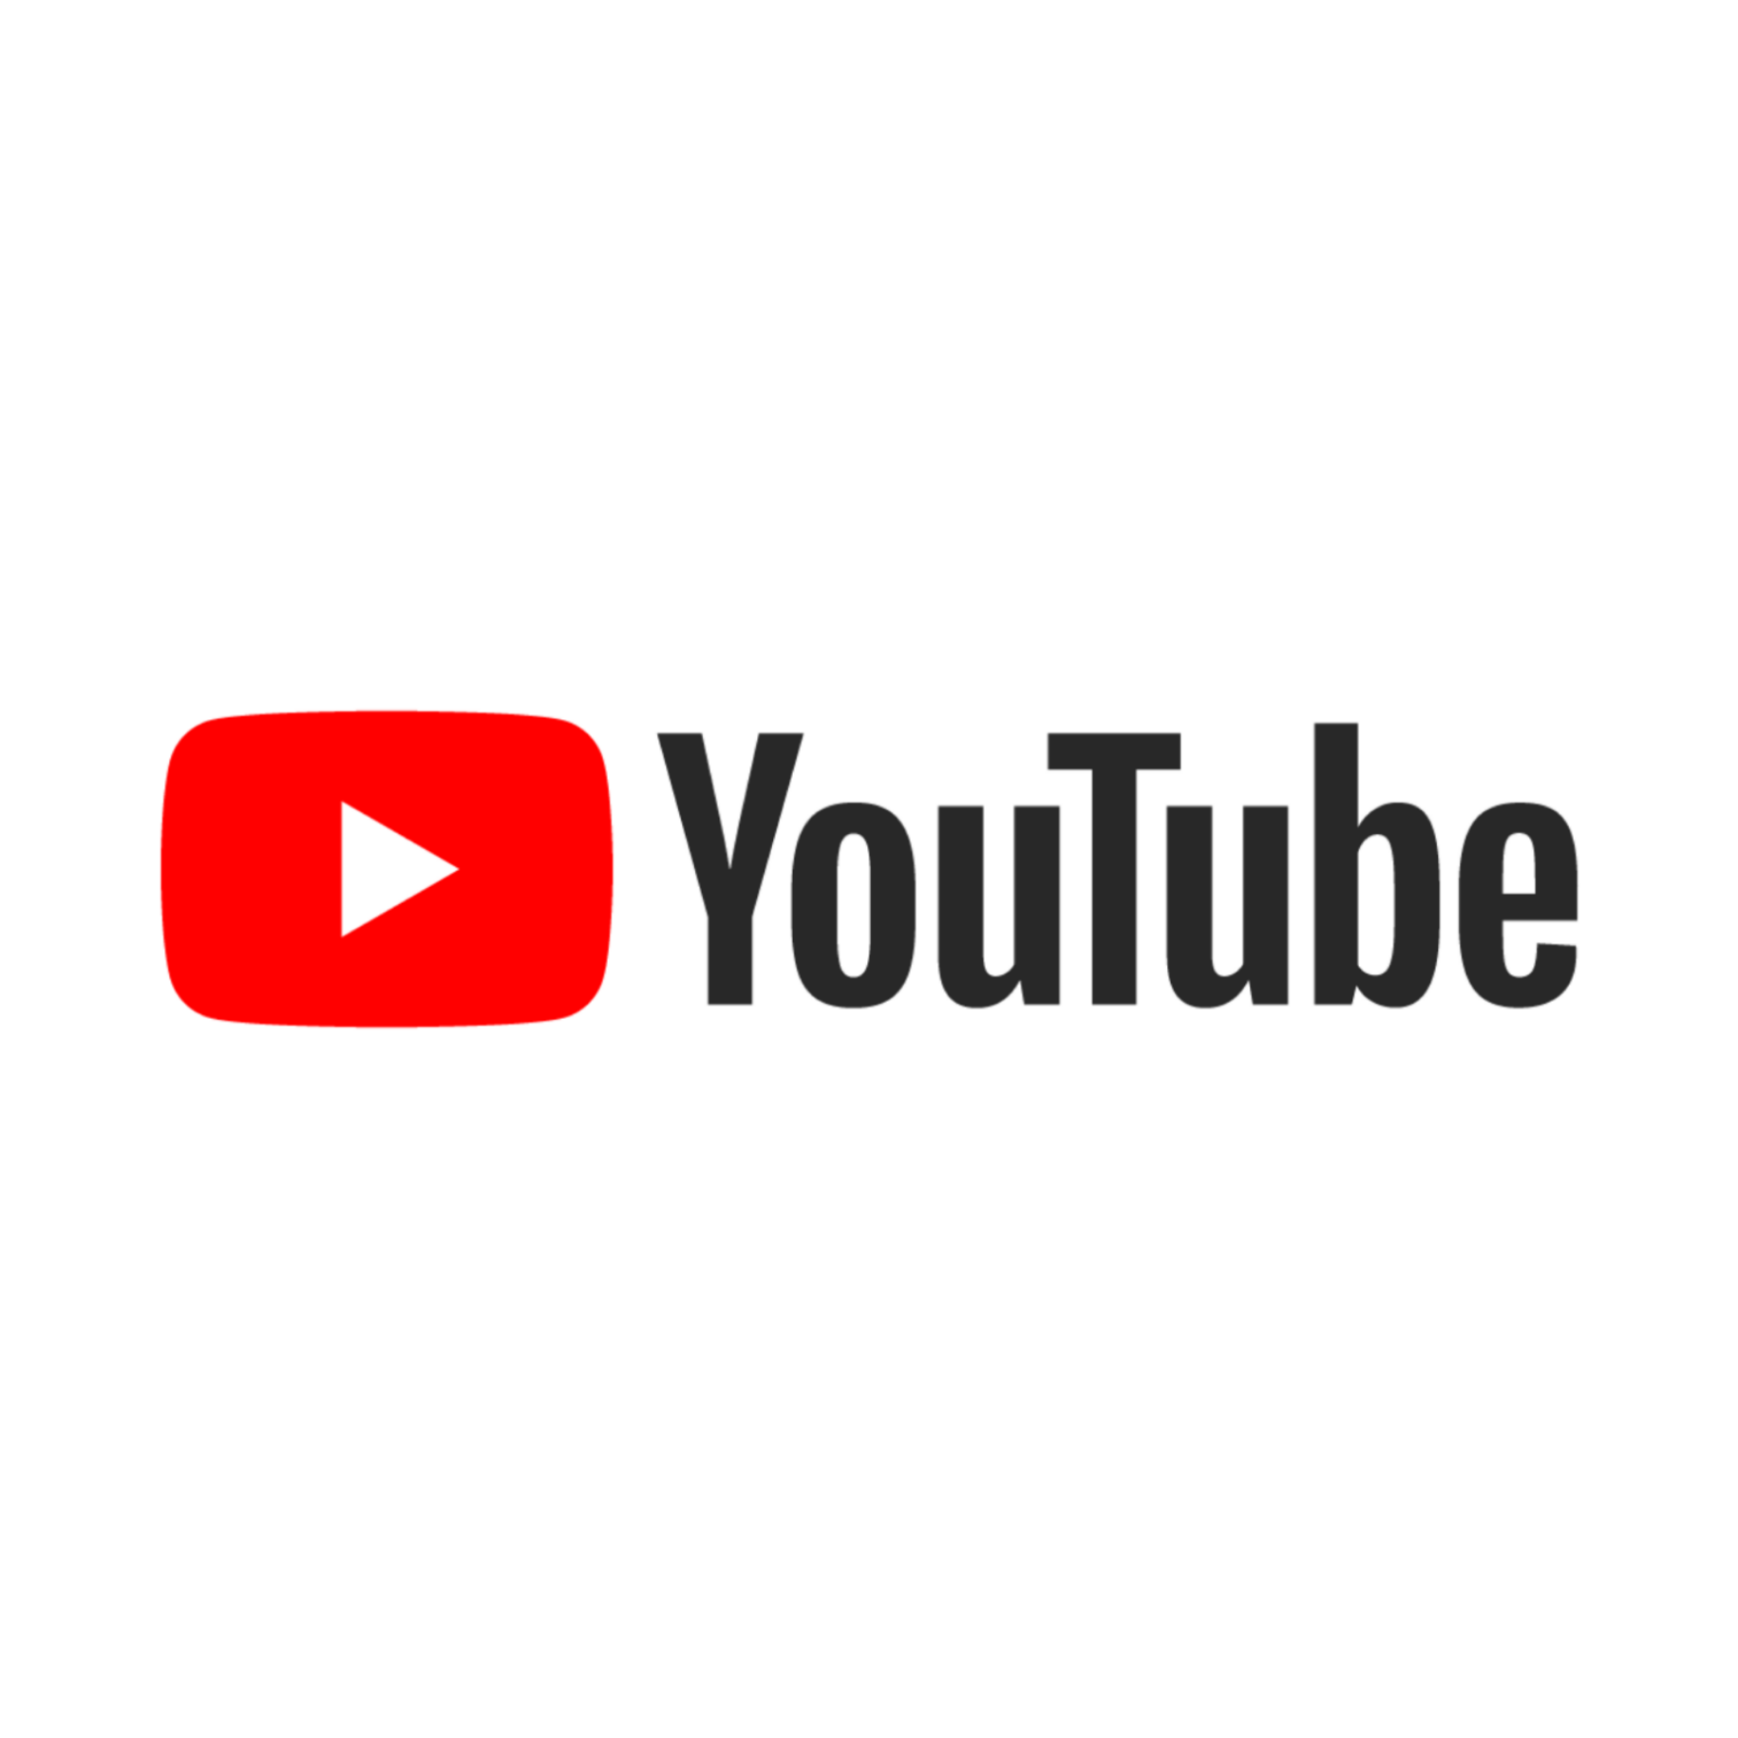 Https uknig com. Логотип youtube. Ютуб youtube. Ютуб фото логотипа. Надпись youtube.